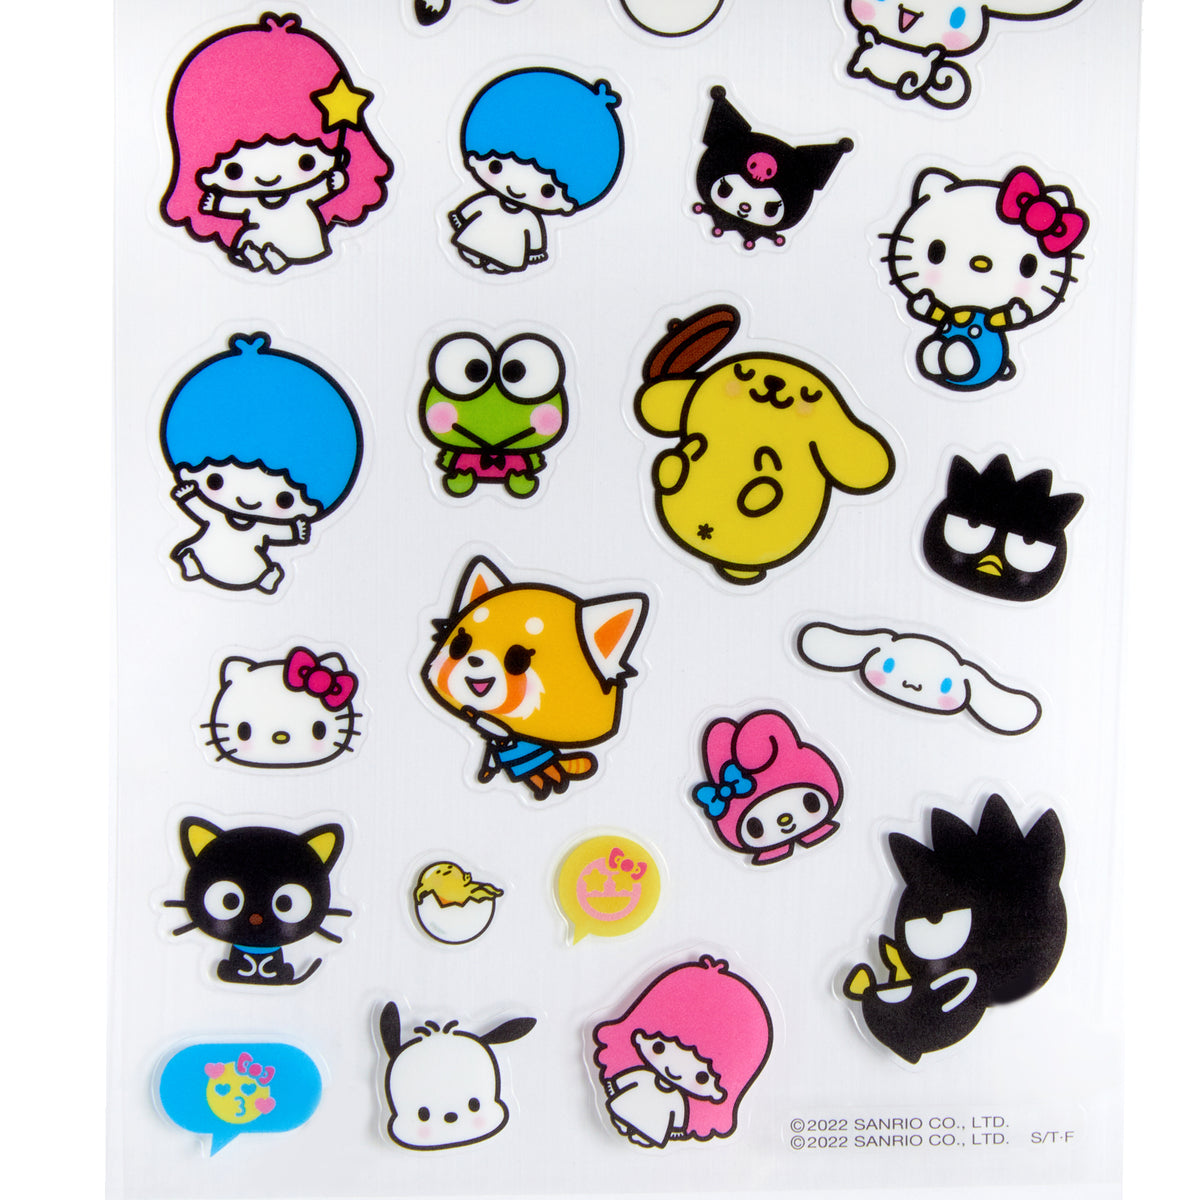 Hello Kitty and Mimmy Best Friends Sticker Sheet